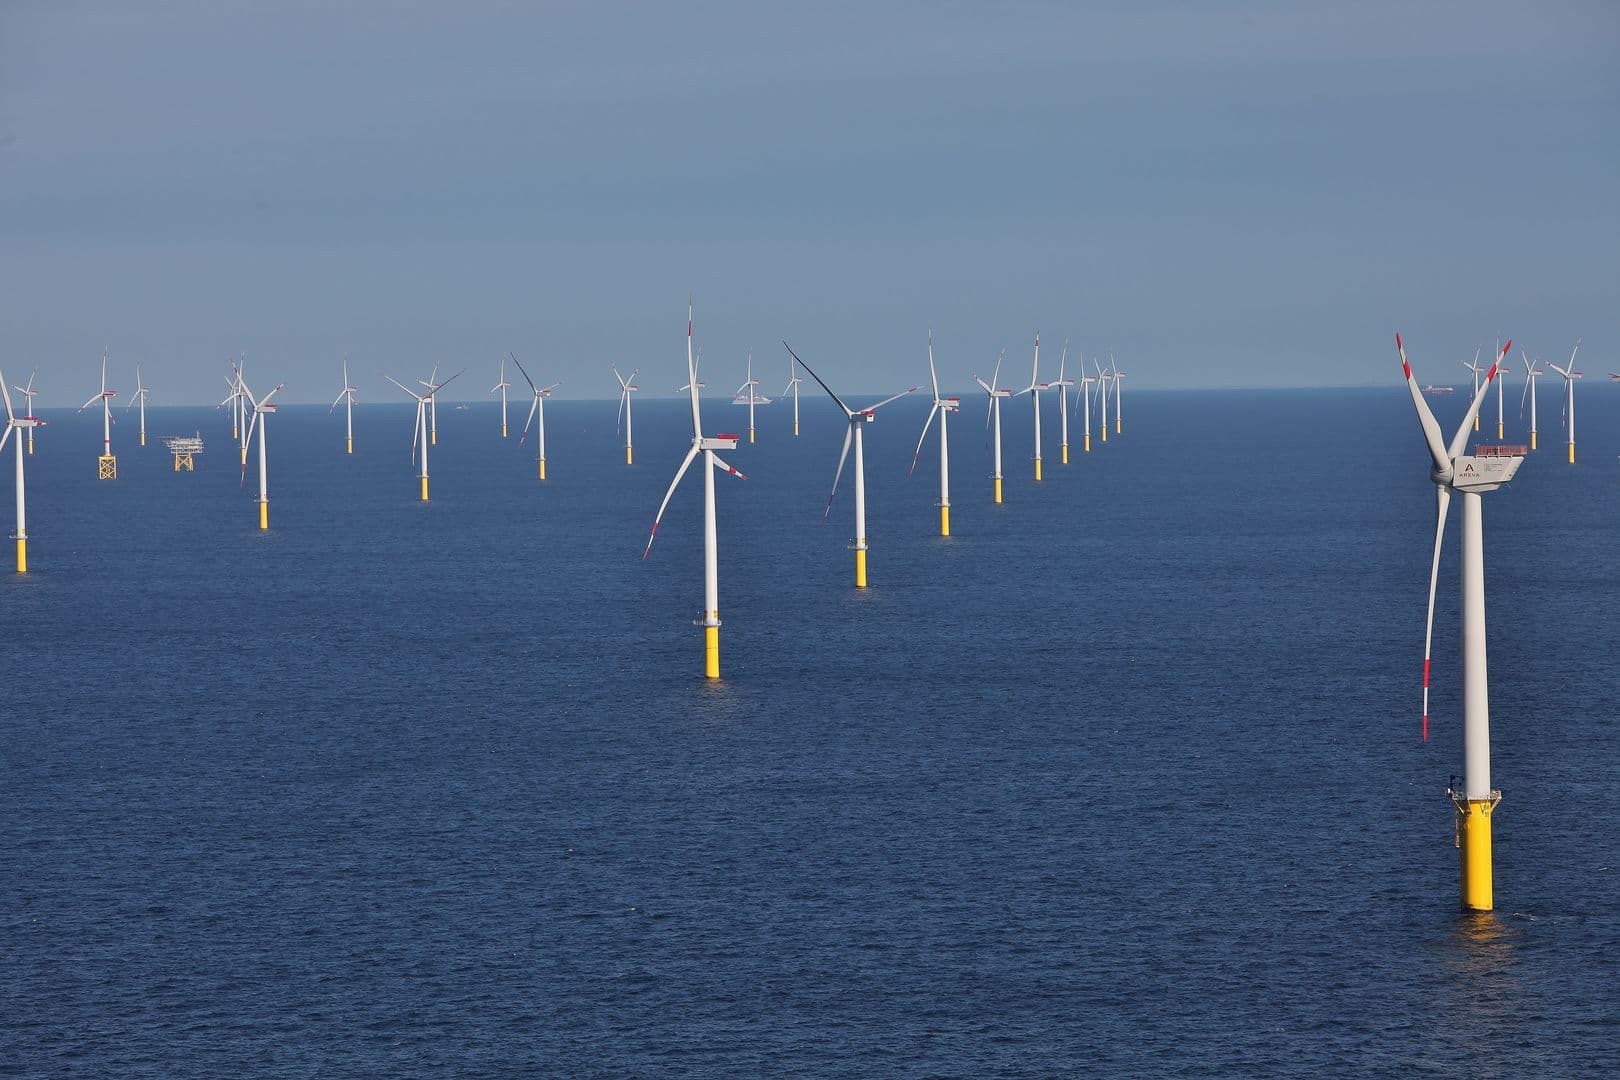 offshore wind farm